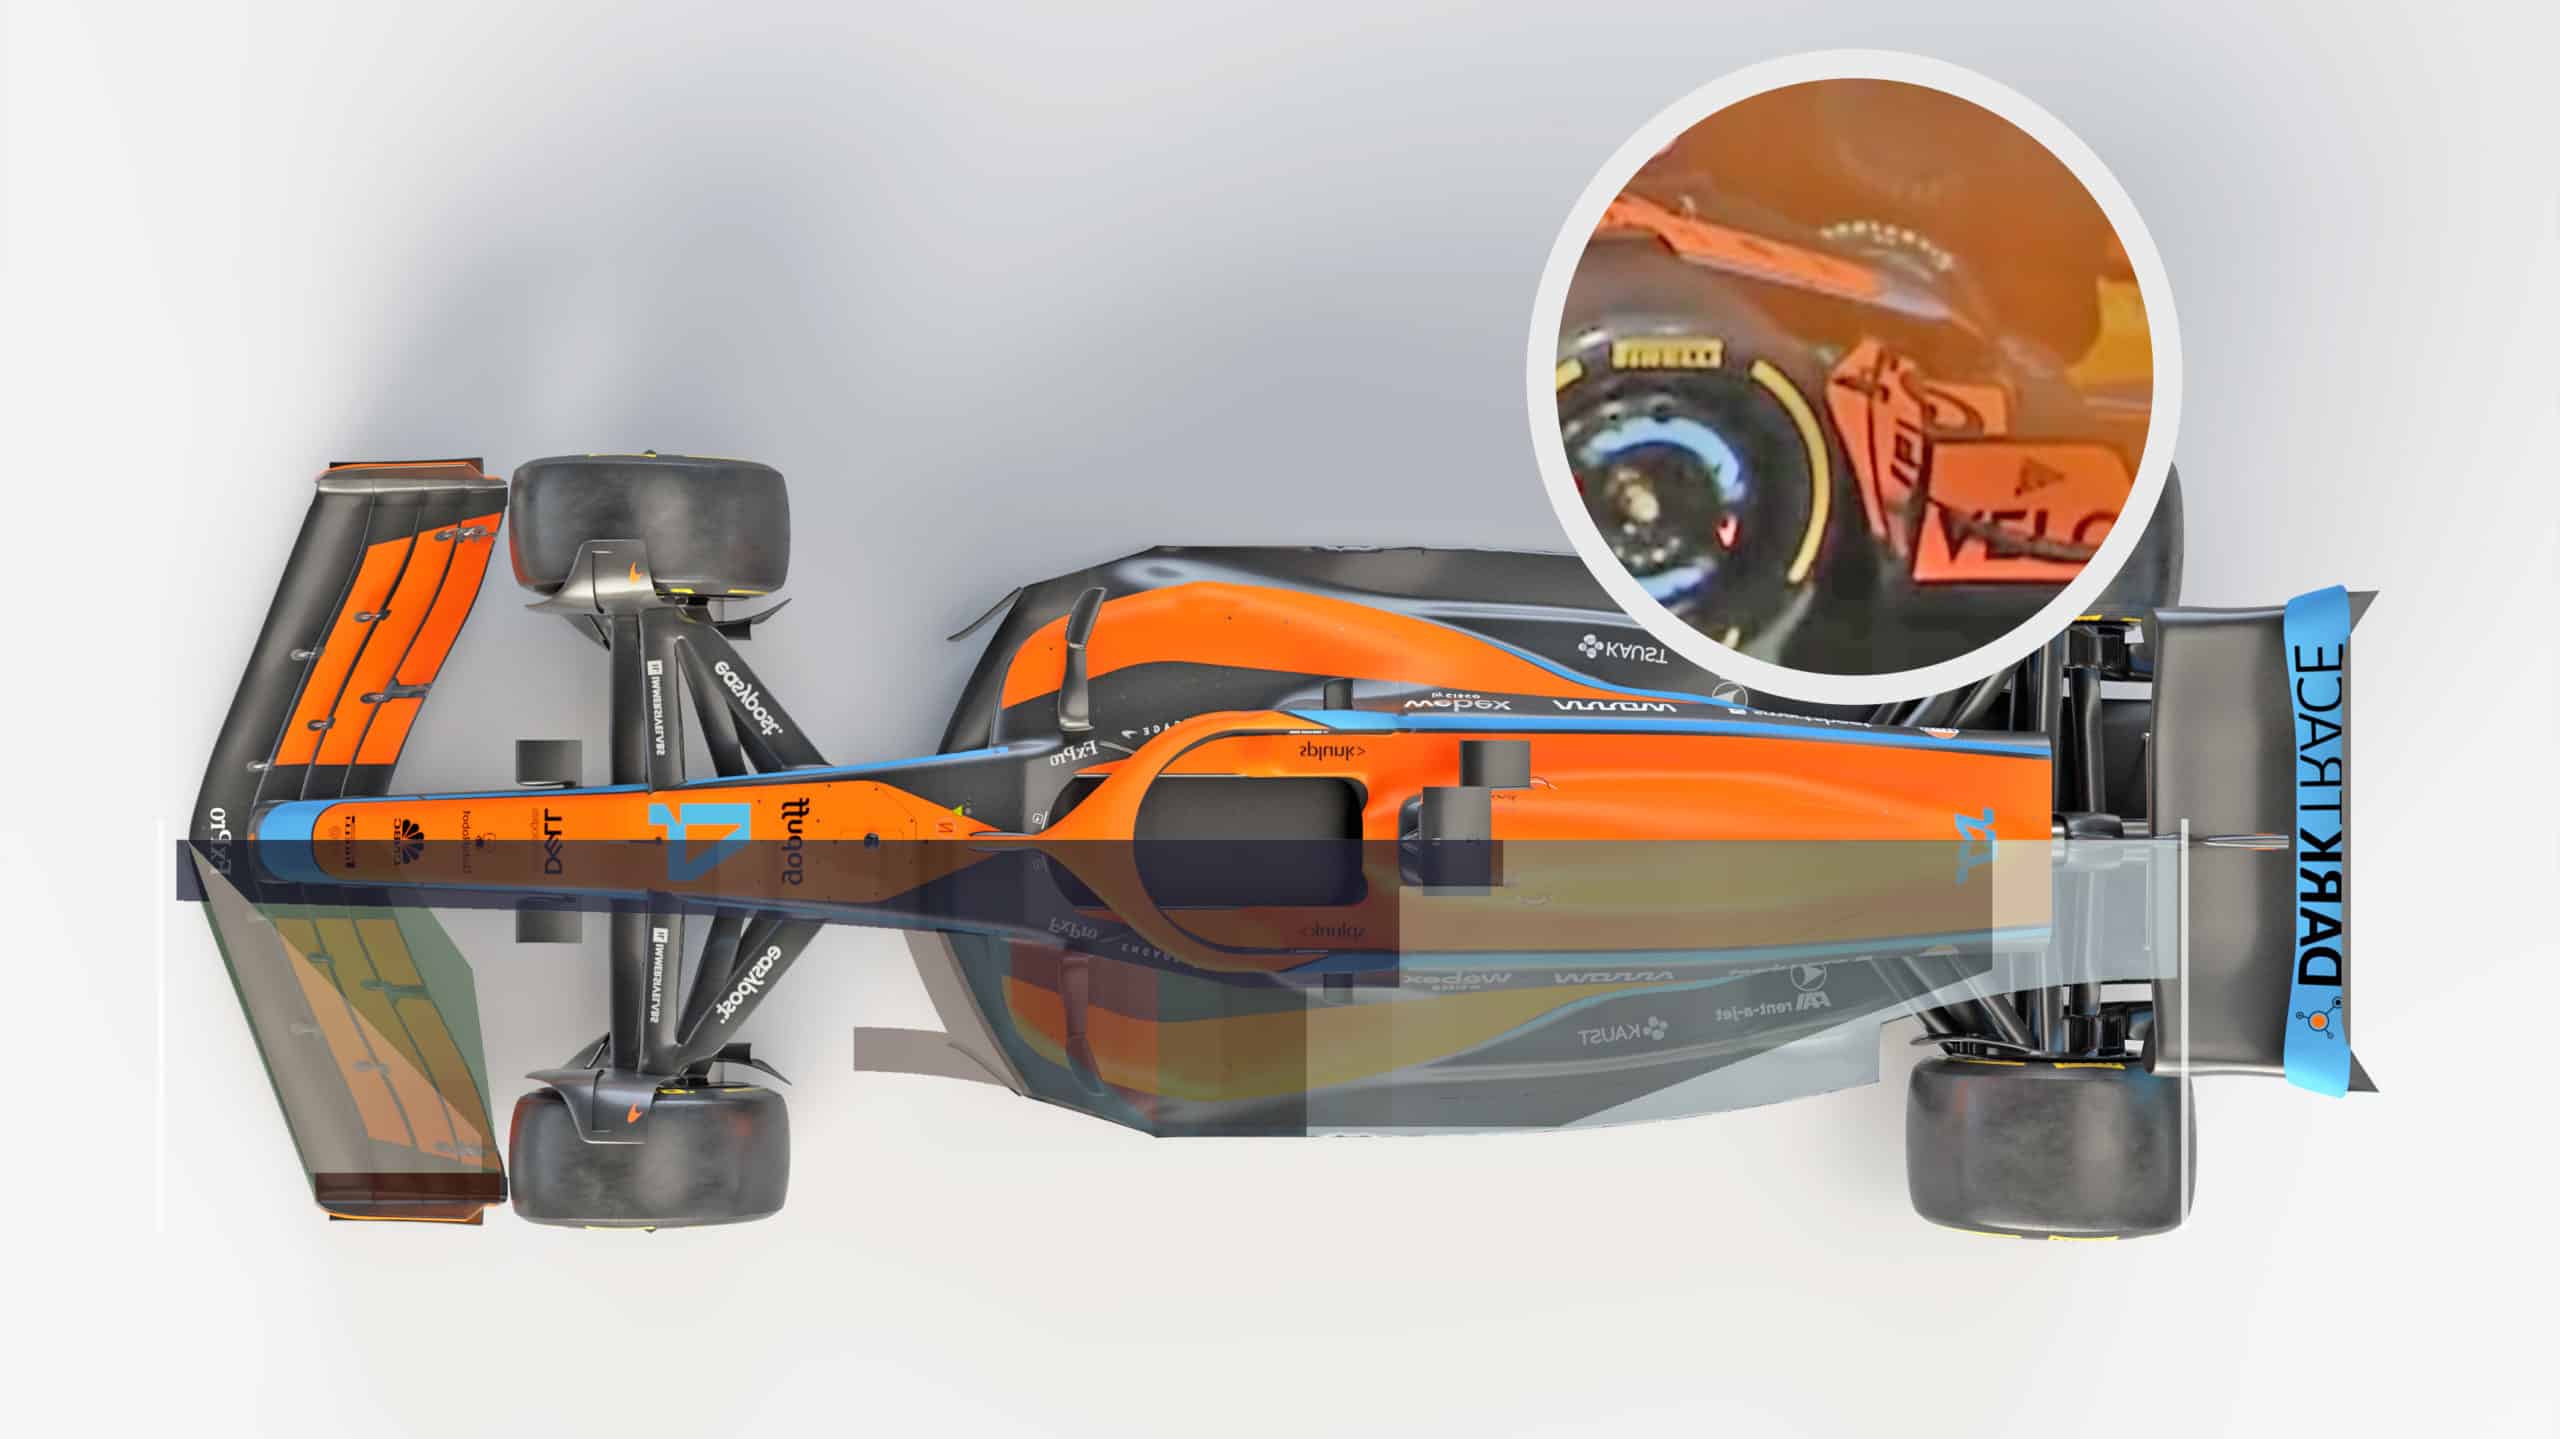 2021 McLaren F1 car legality box